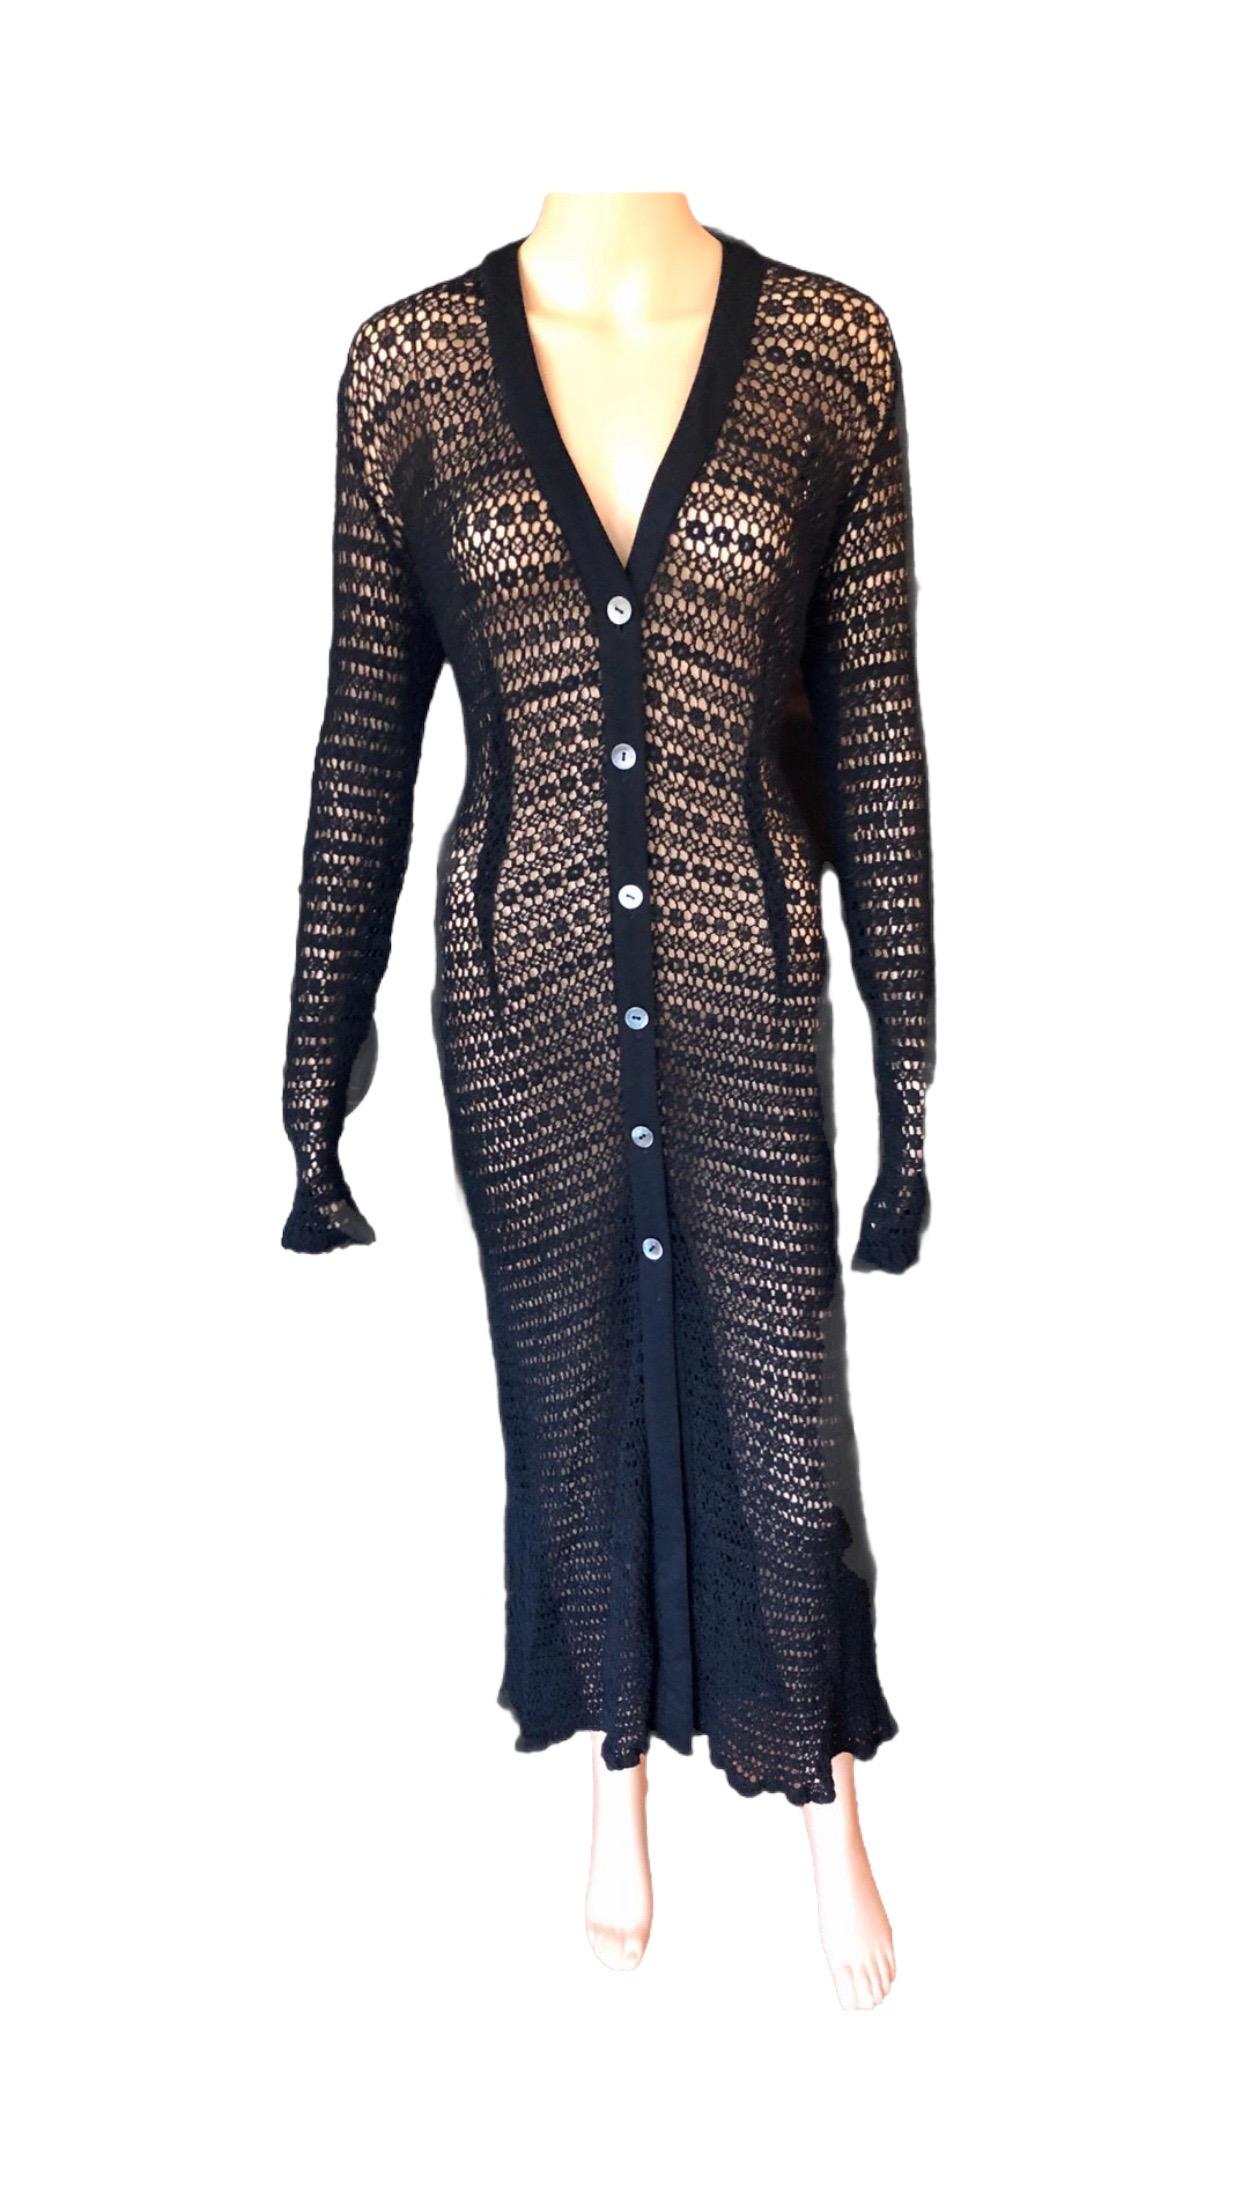 Women's or Men's Dolce & Gabbana Vintage 1990's Sheer Open Knit Crochet Fishnet Black Maxi Dress